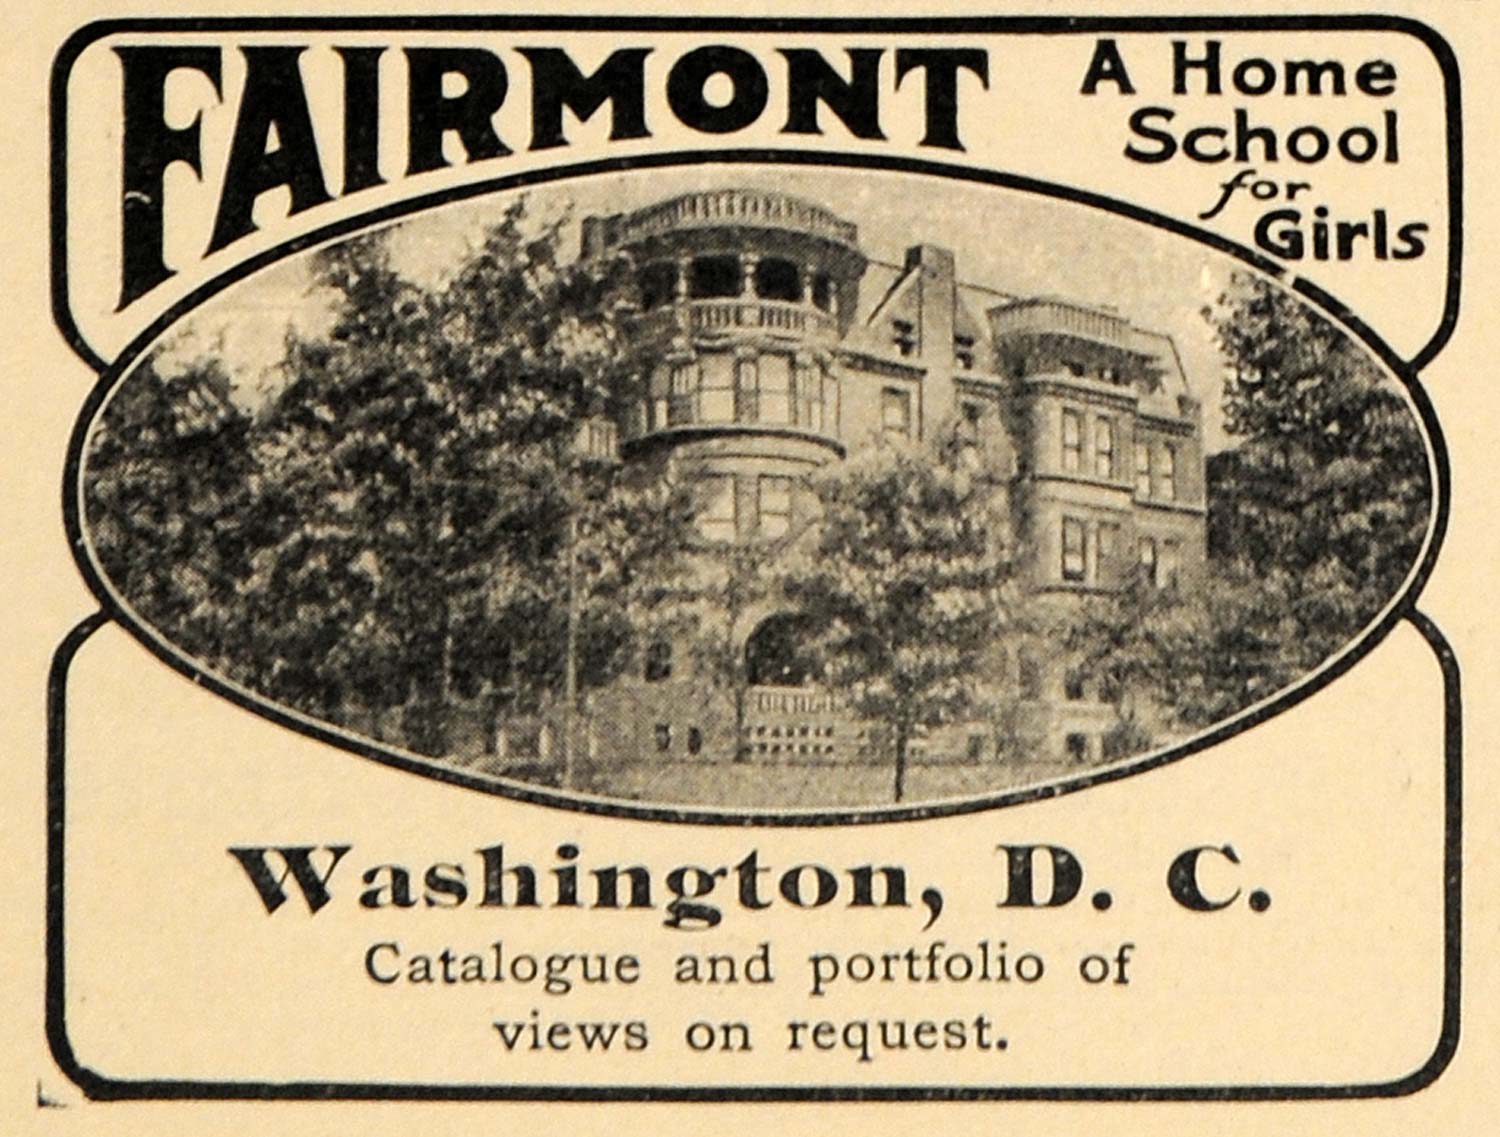 1909 Ad Fairmont Home School For Girls Washington D. C. - ORIGINAL TOM1